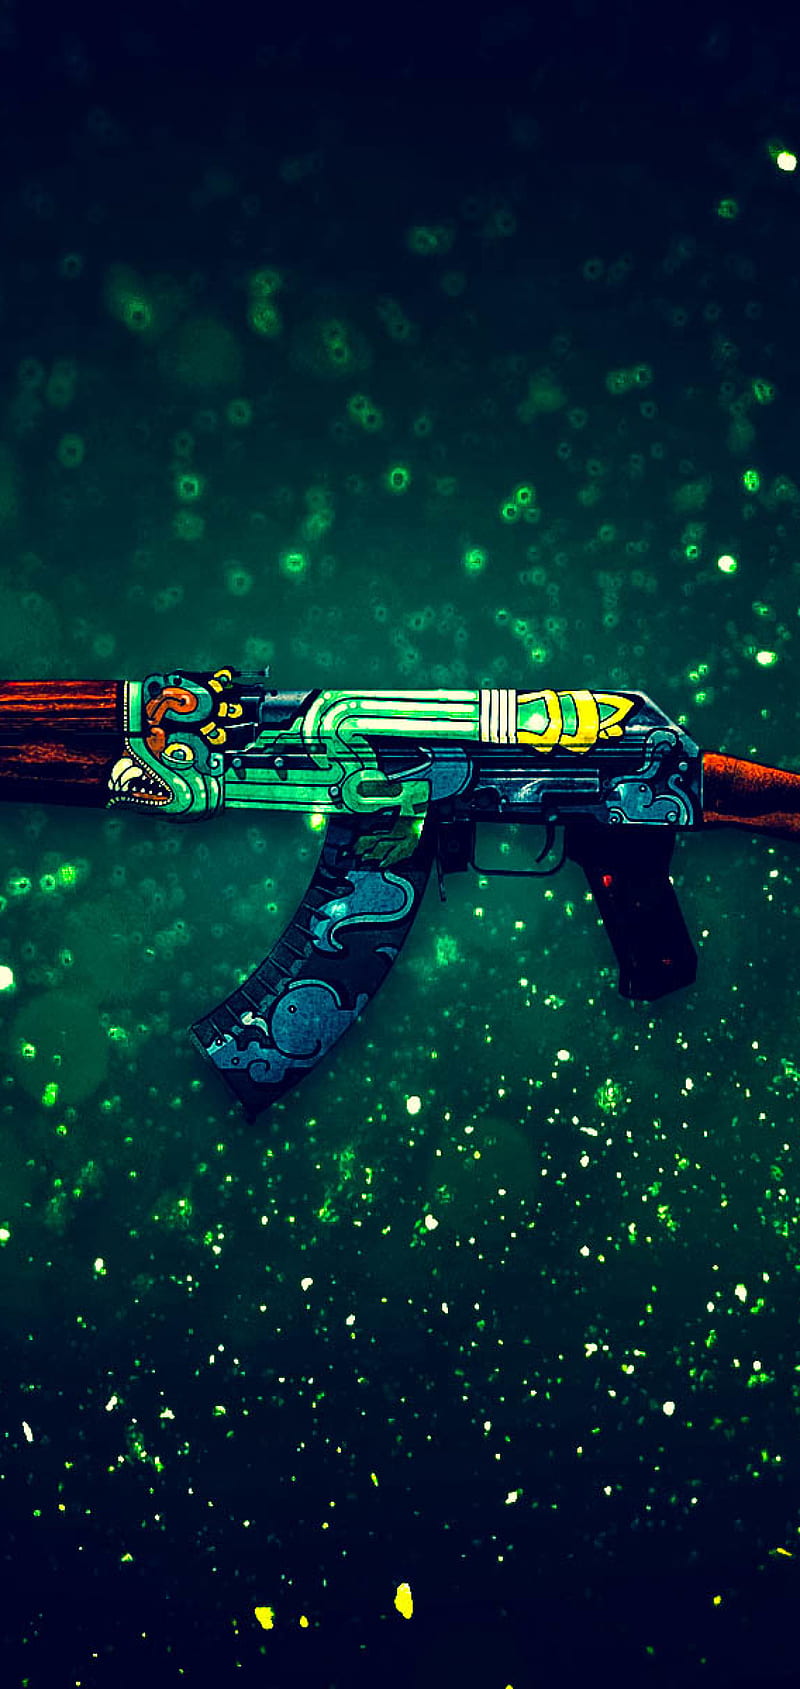 Century Arms  Battlefield Pick Up guns gunsofinstgram draco ak ak47  callofduty cod  Facebook